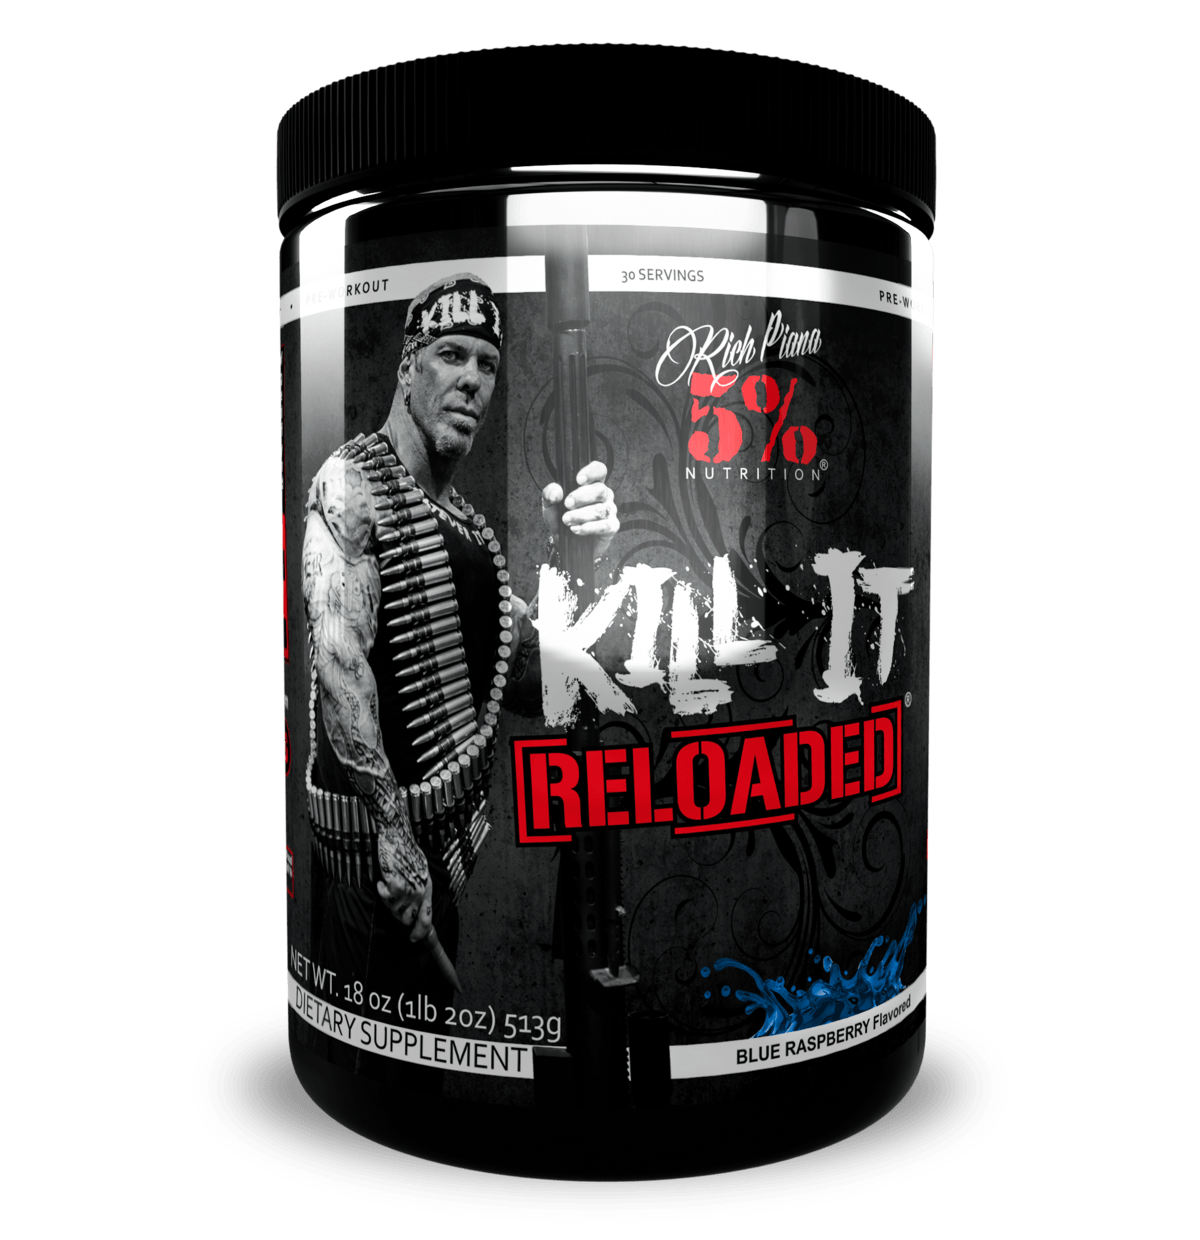 Kill It Reloaded, 513 g, Rich Piana 5%. Pre Workout. Energy & Endurance 